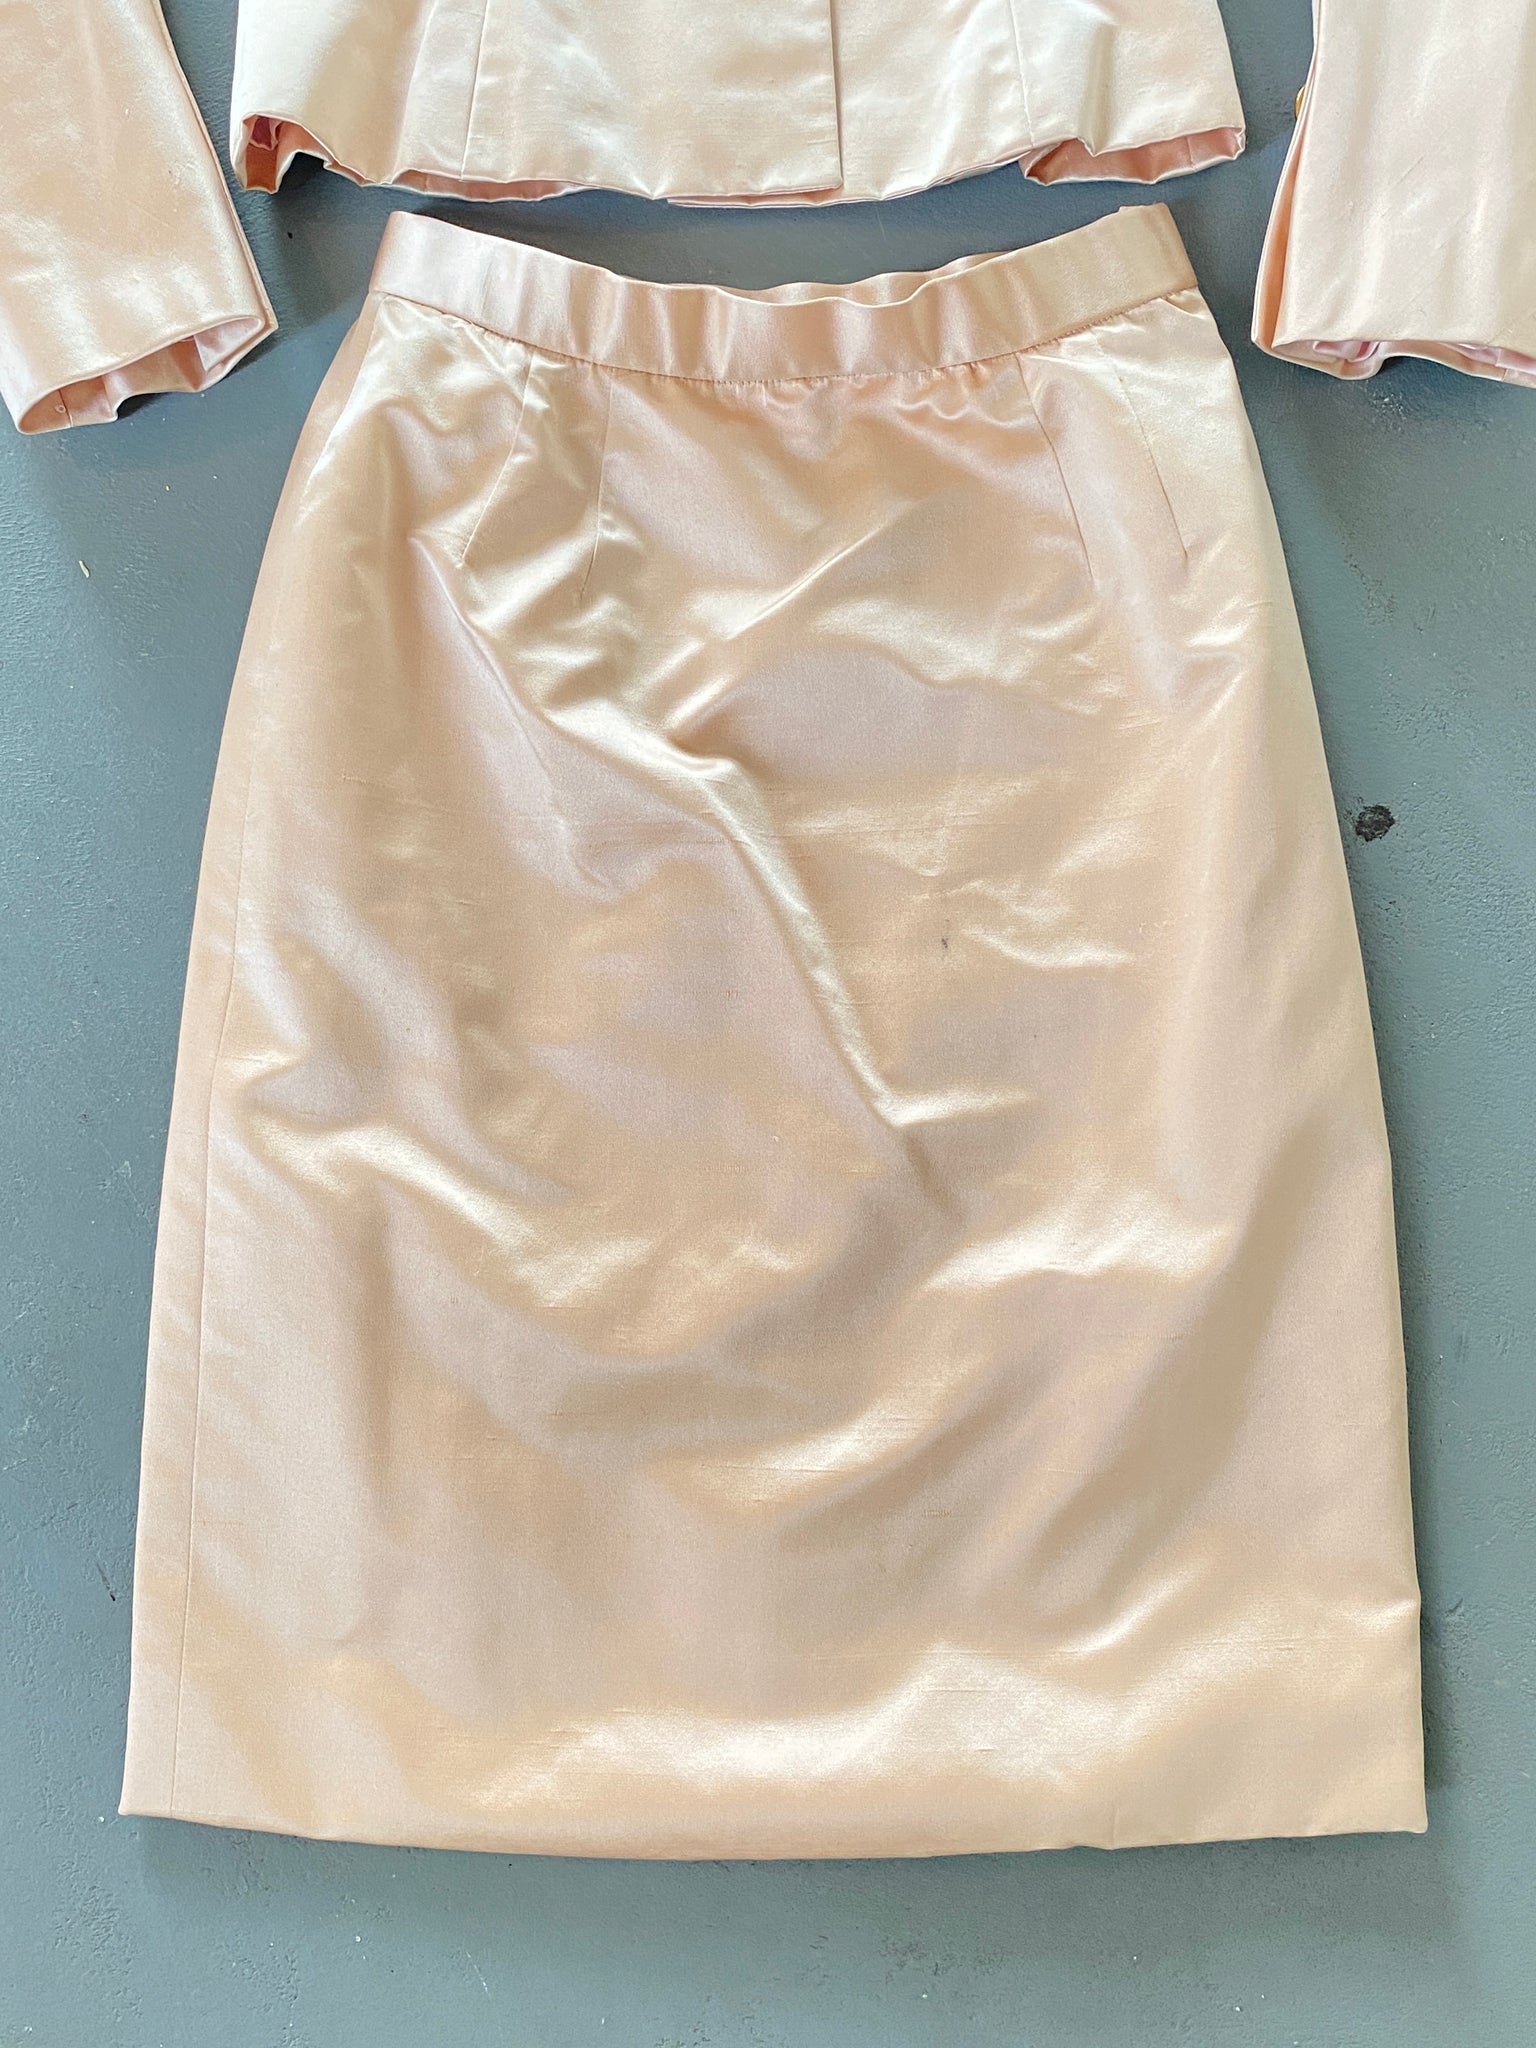 Vintage Oscar de la Renta Light Pink Skirt Suit (S)